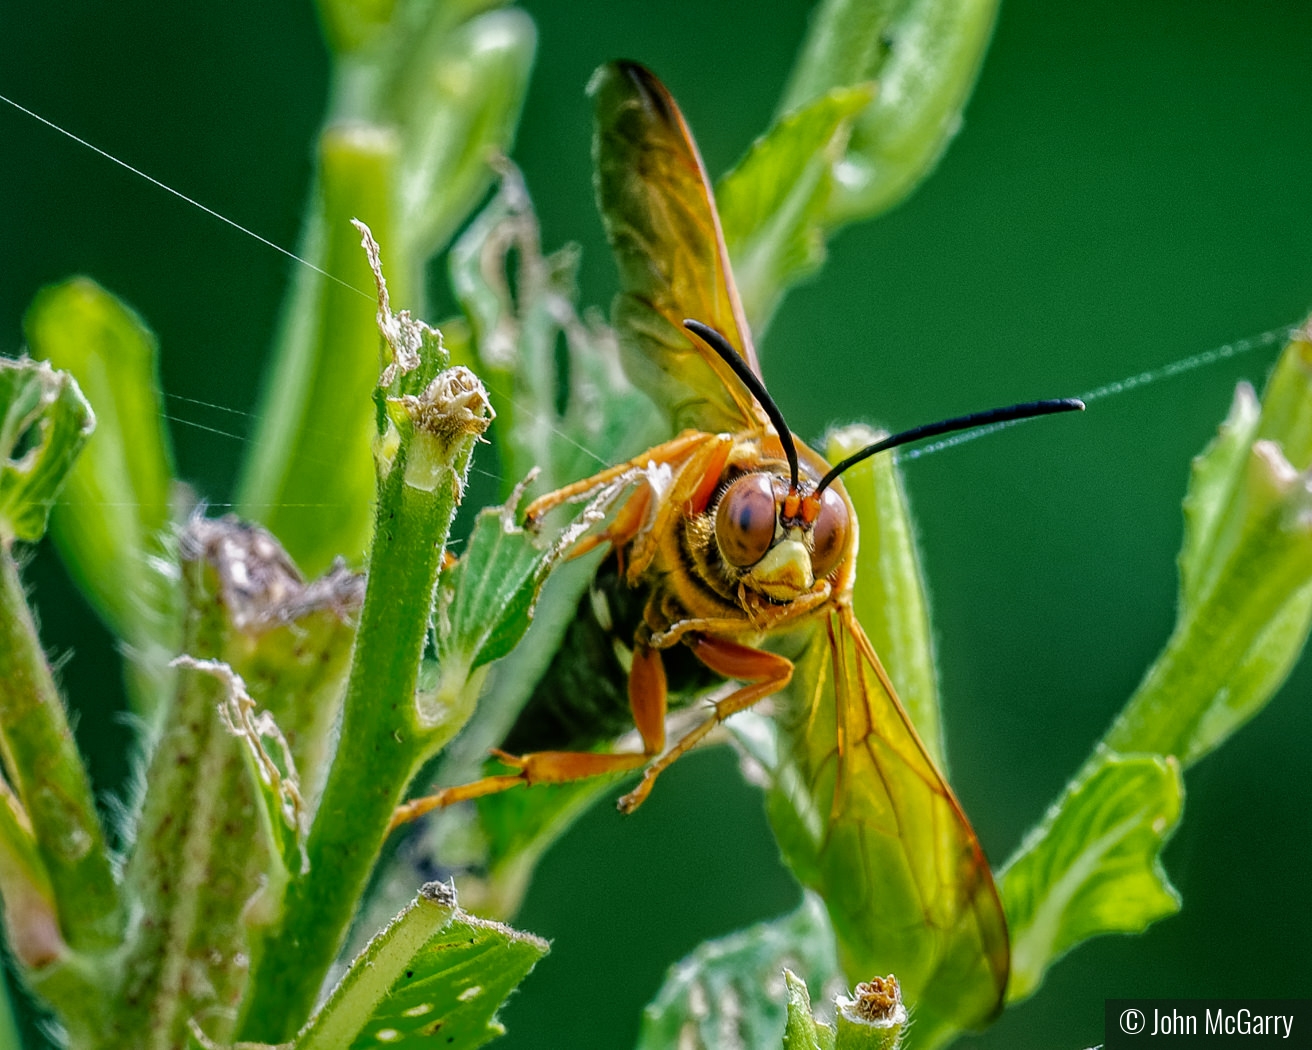 Cicada Killer with an Attitude by John McGarry